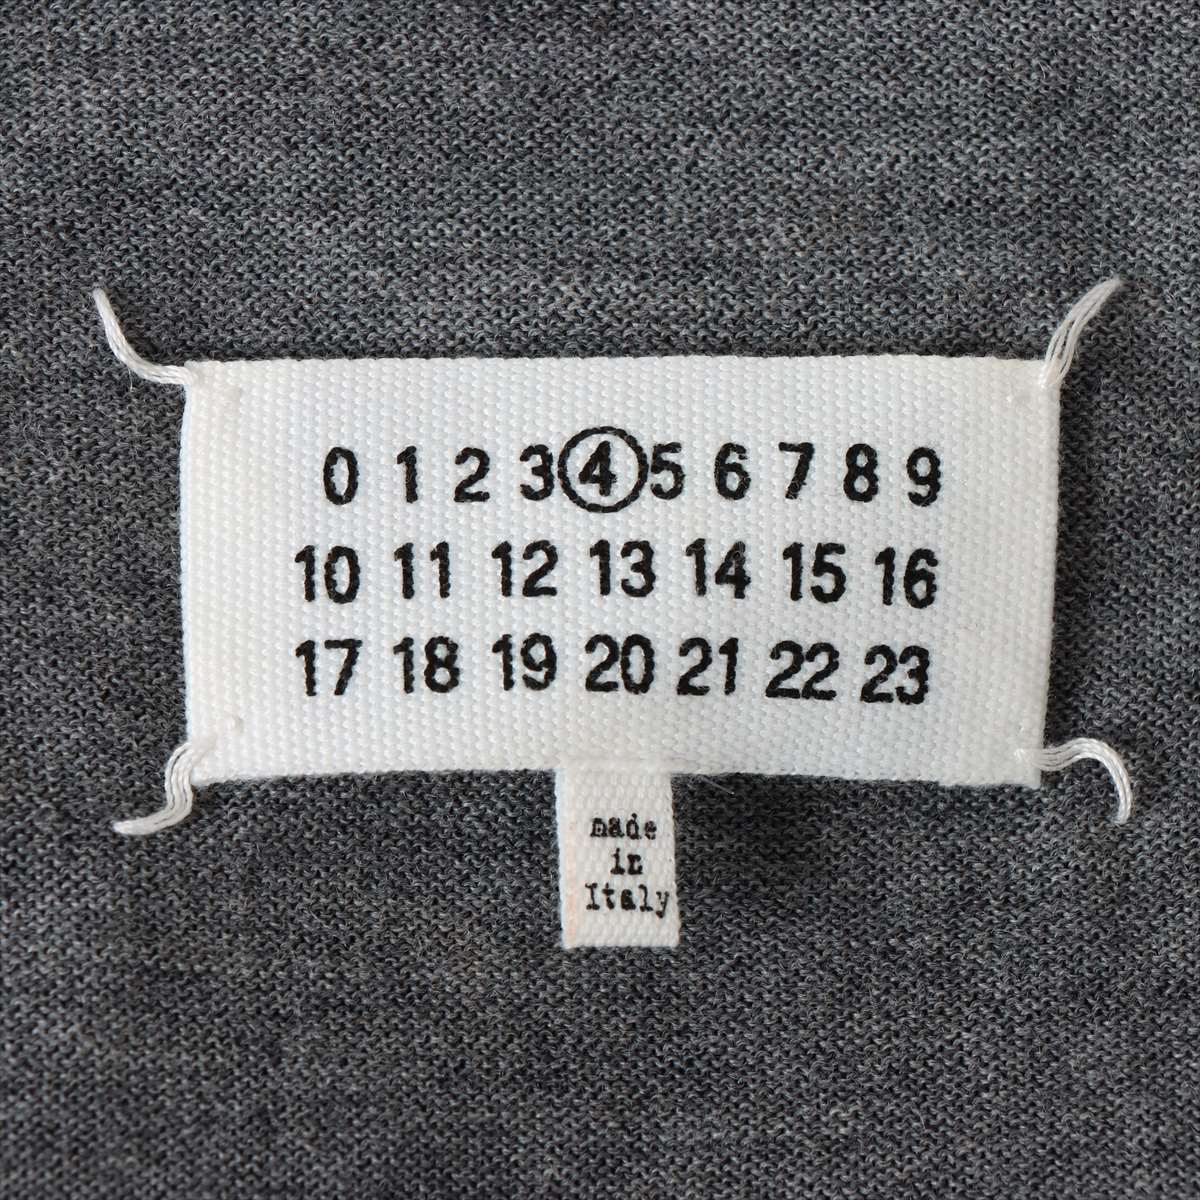 Maison Margiela Wool Knit dress 4 Ladies' Grey  4 S51CU0047